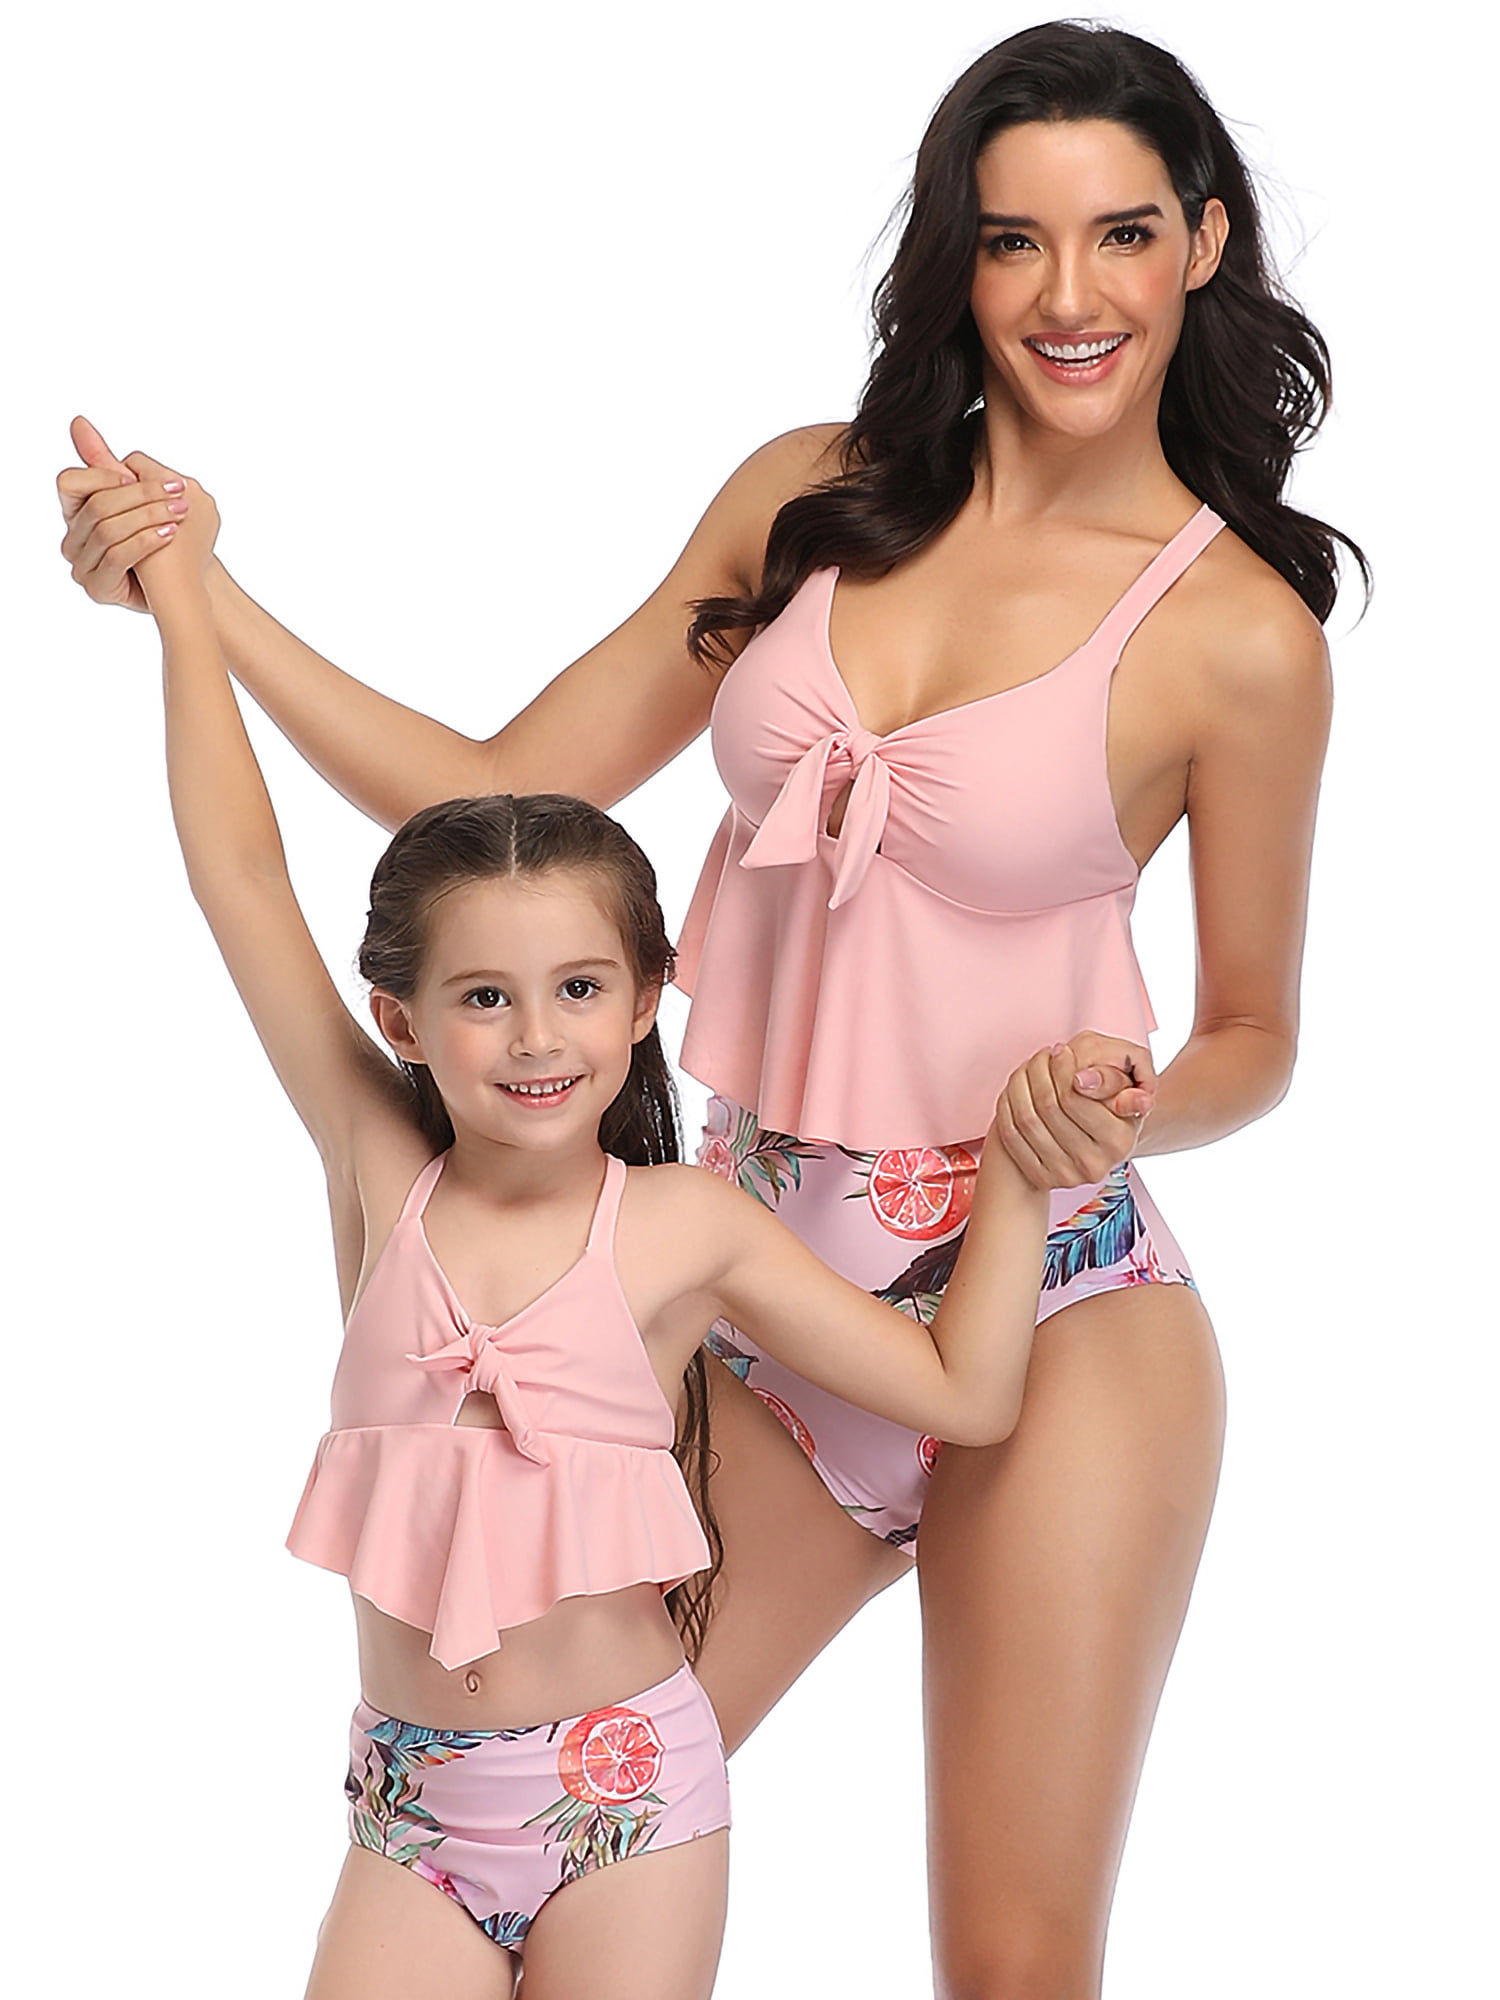 Parent Child Swimwear Underwear Beach Wear Matching Family Outfits Kids Swimsuit